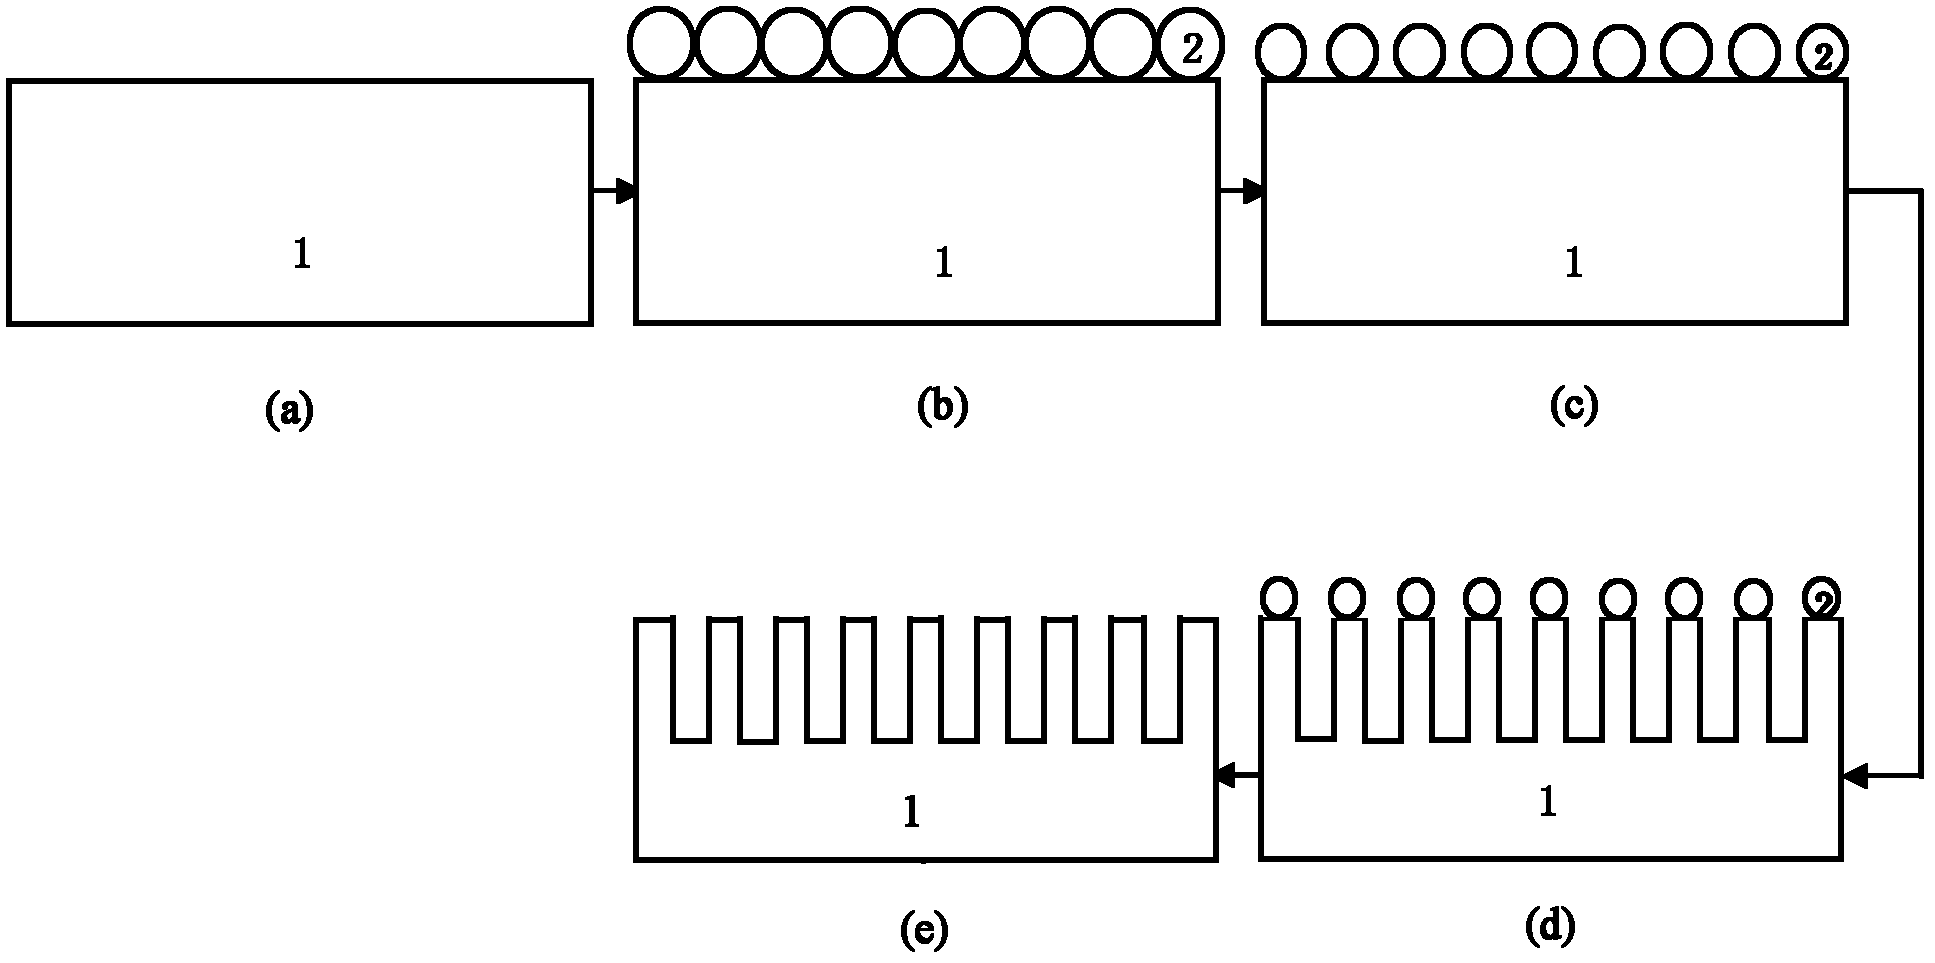 Method for preparing silicon nano-pillar array based on nanosphere etching technology